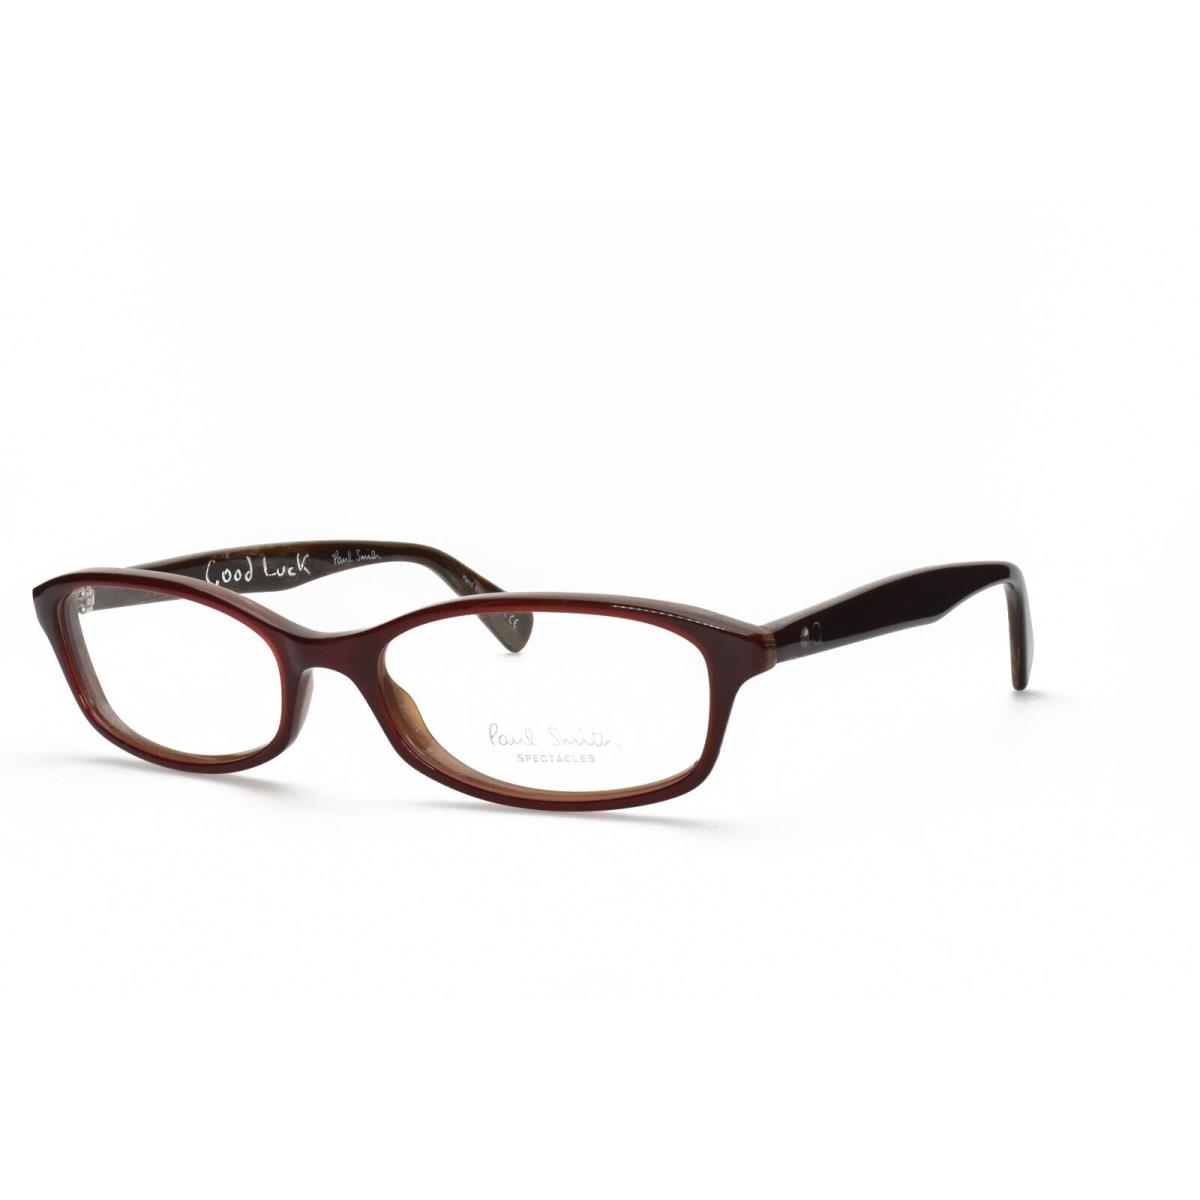 Paul Smith PS Hann 8127 1060 Eyeglasses Frames Only 51-16-140